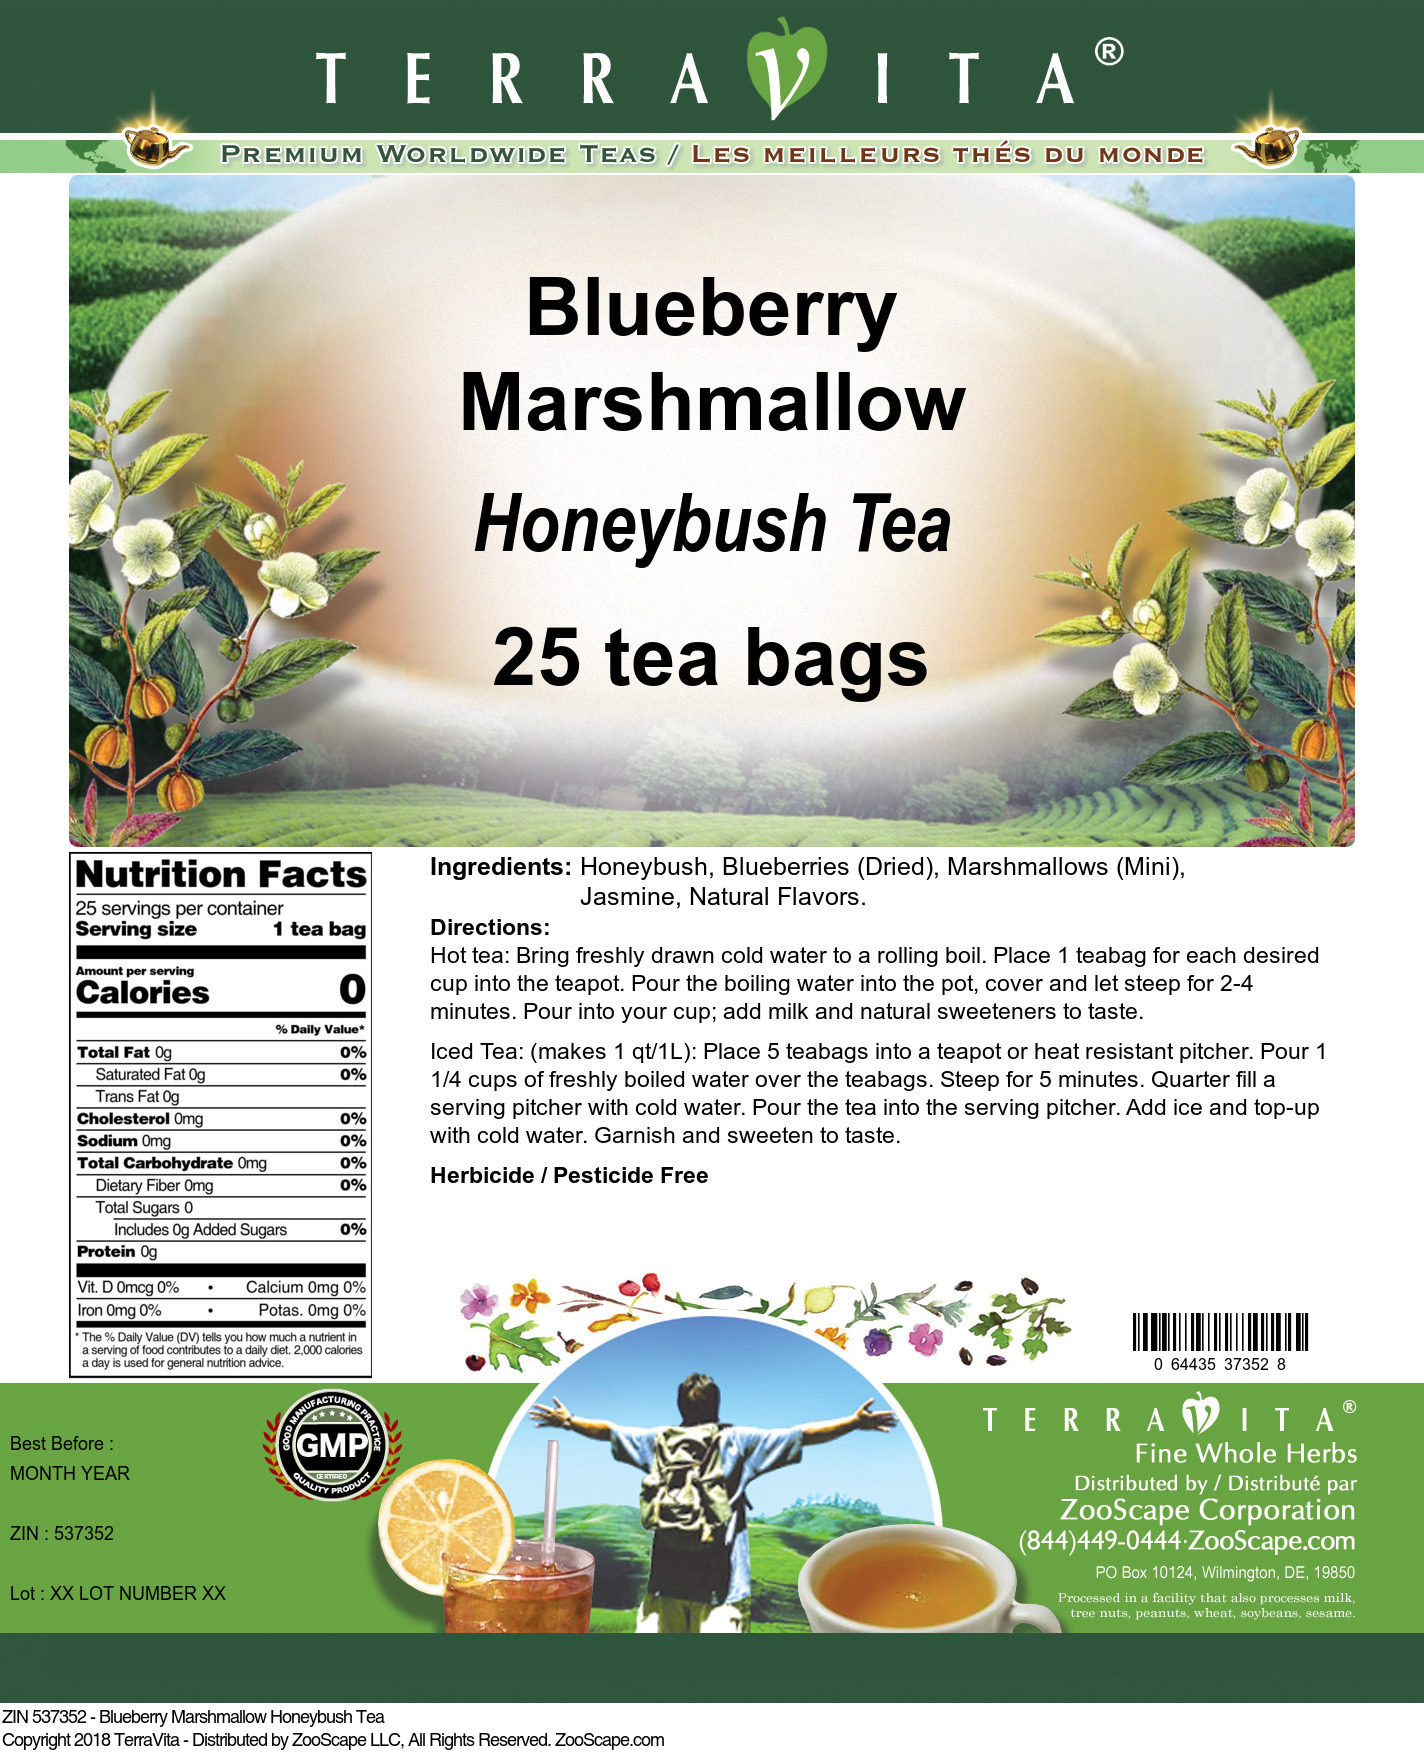 Blueberry Marshmallow Honeybush Tea - Label